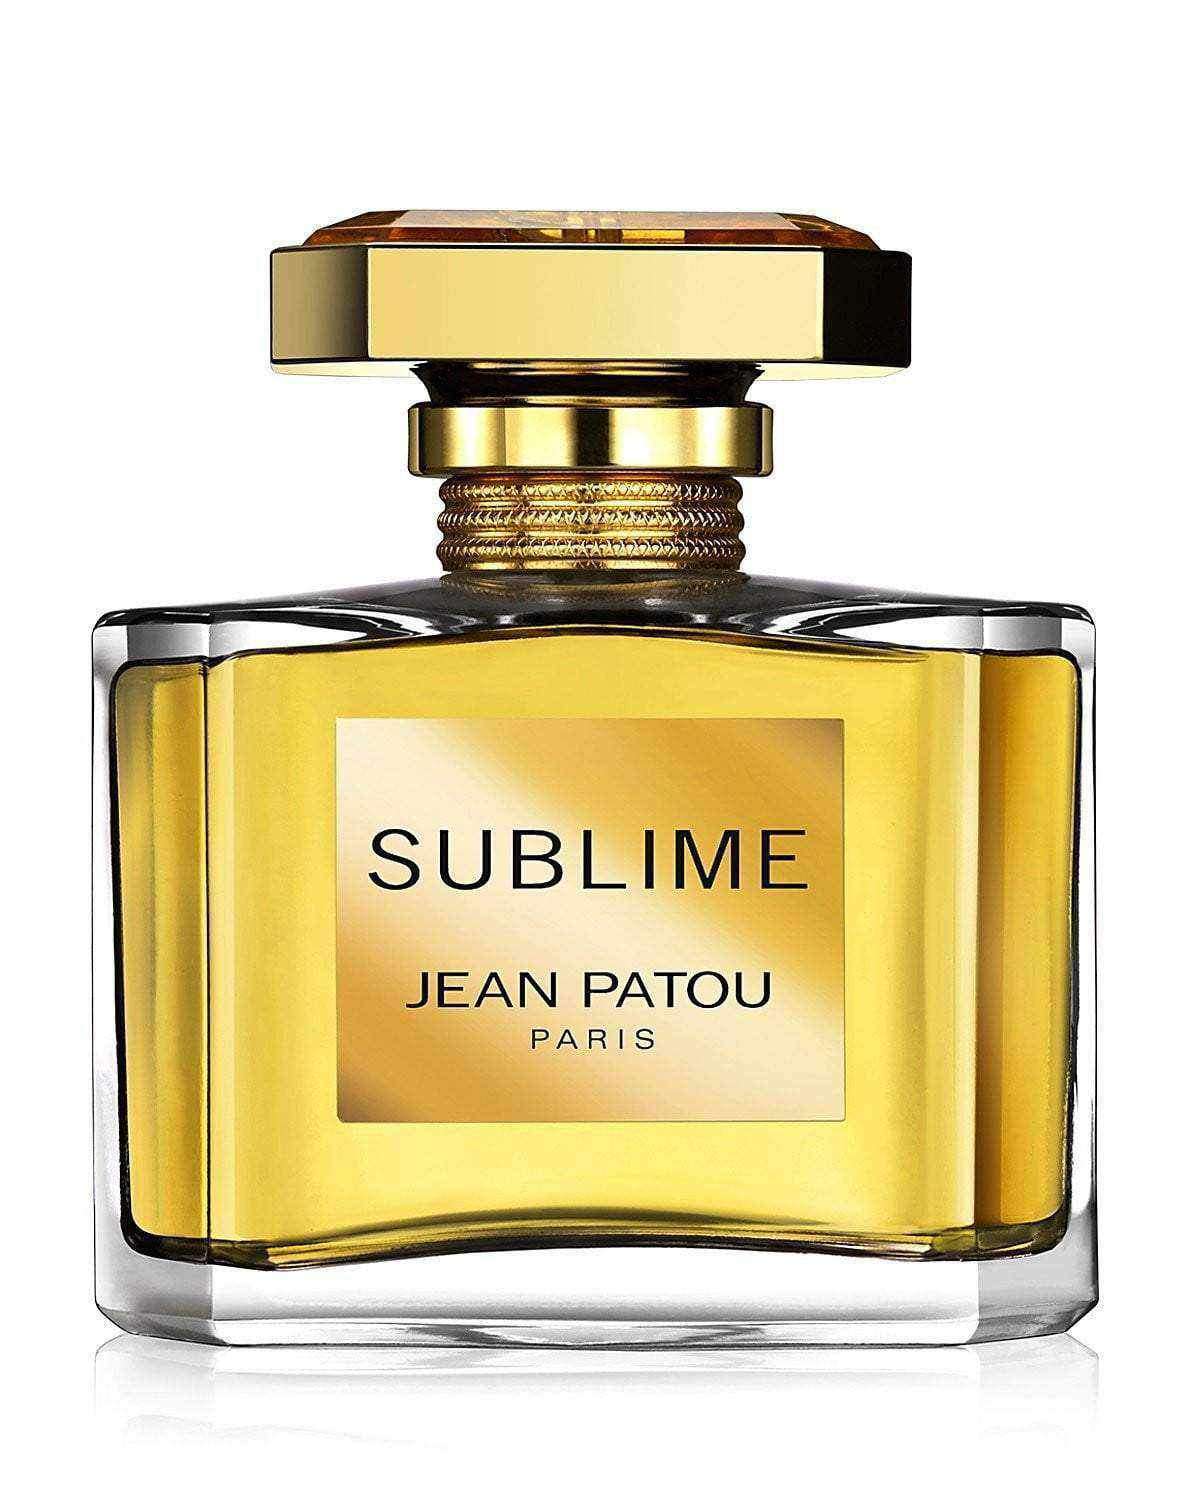 Jean Patou Sublime | Buy Perfume Online | My Perfume Shop